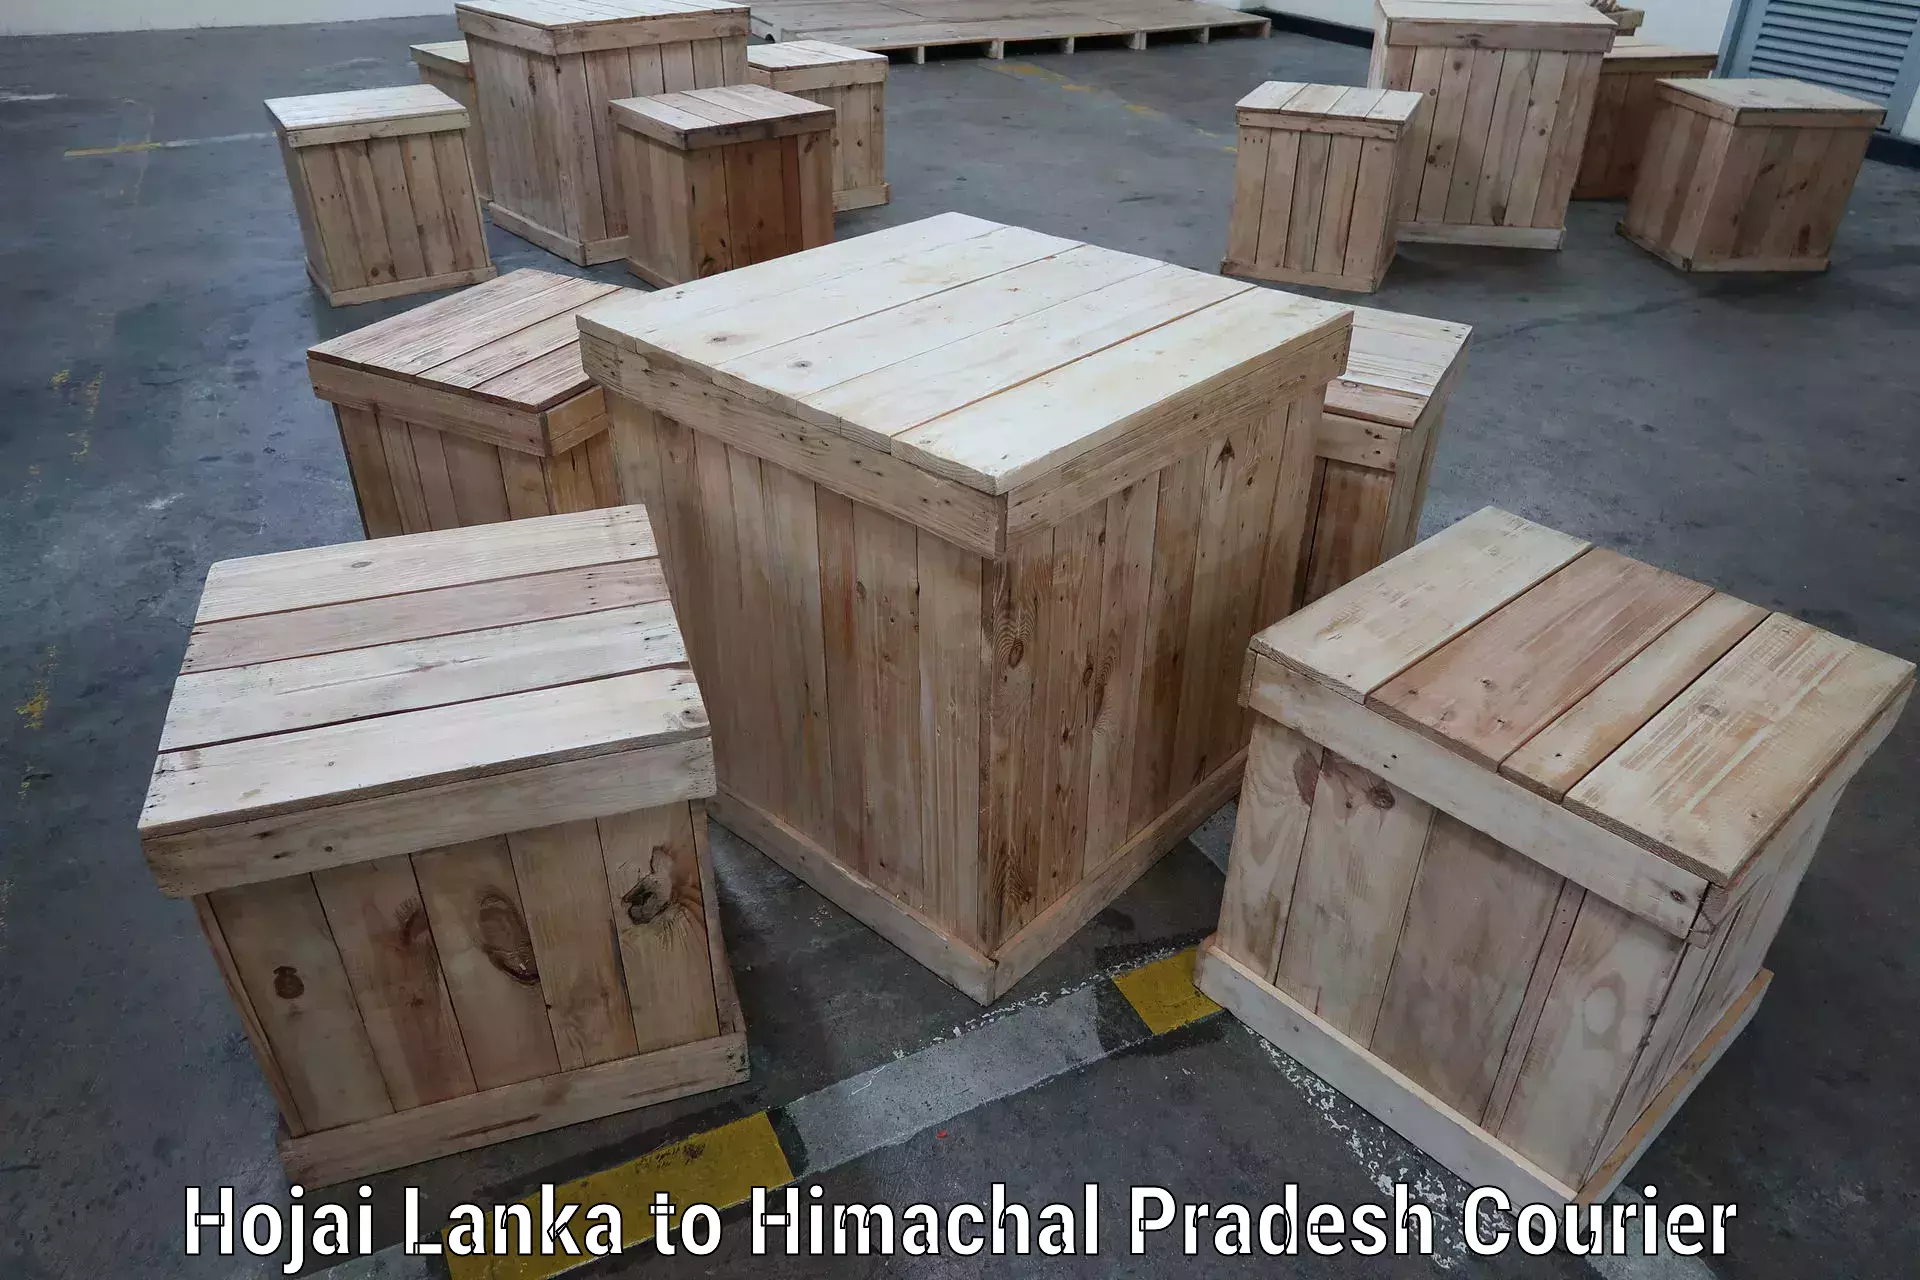 End-to-end delivery Hojai Lanka to Himachal Pradesh